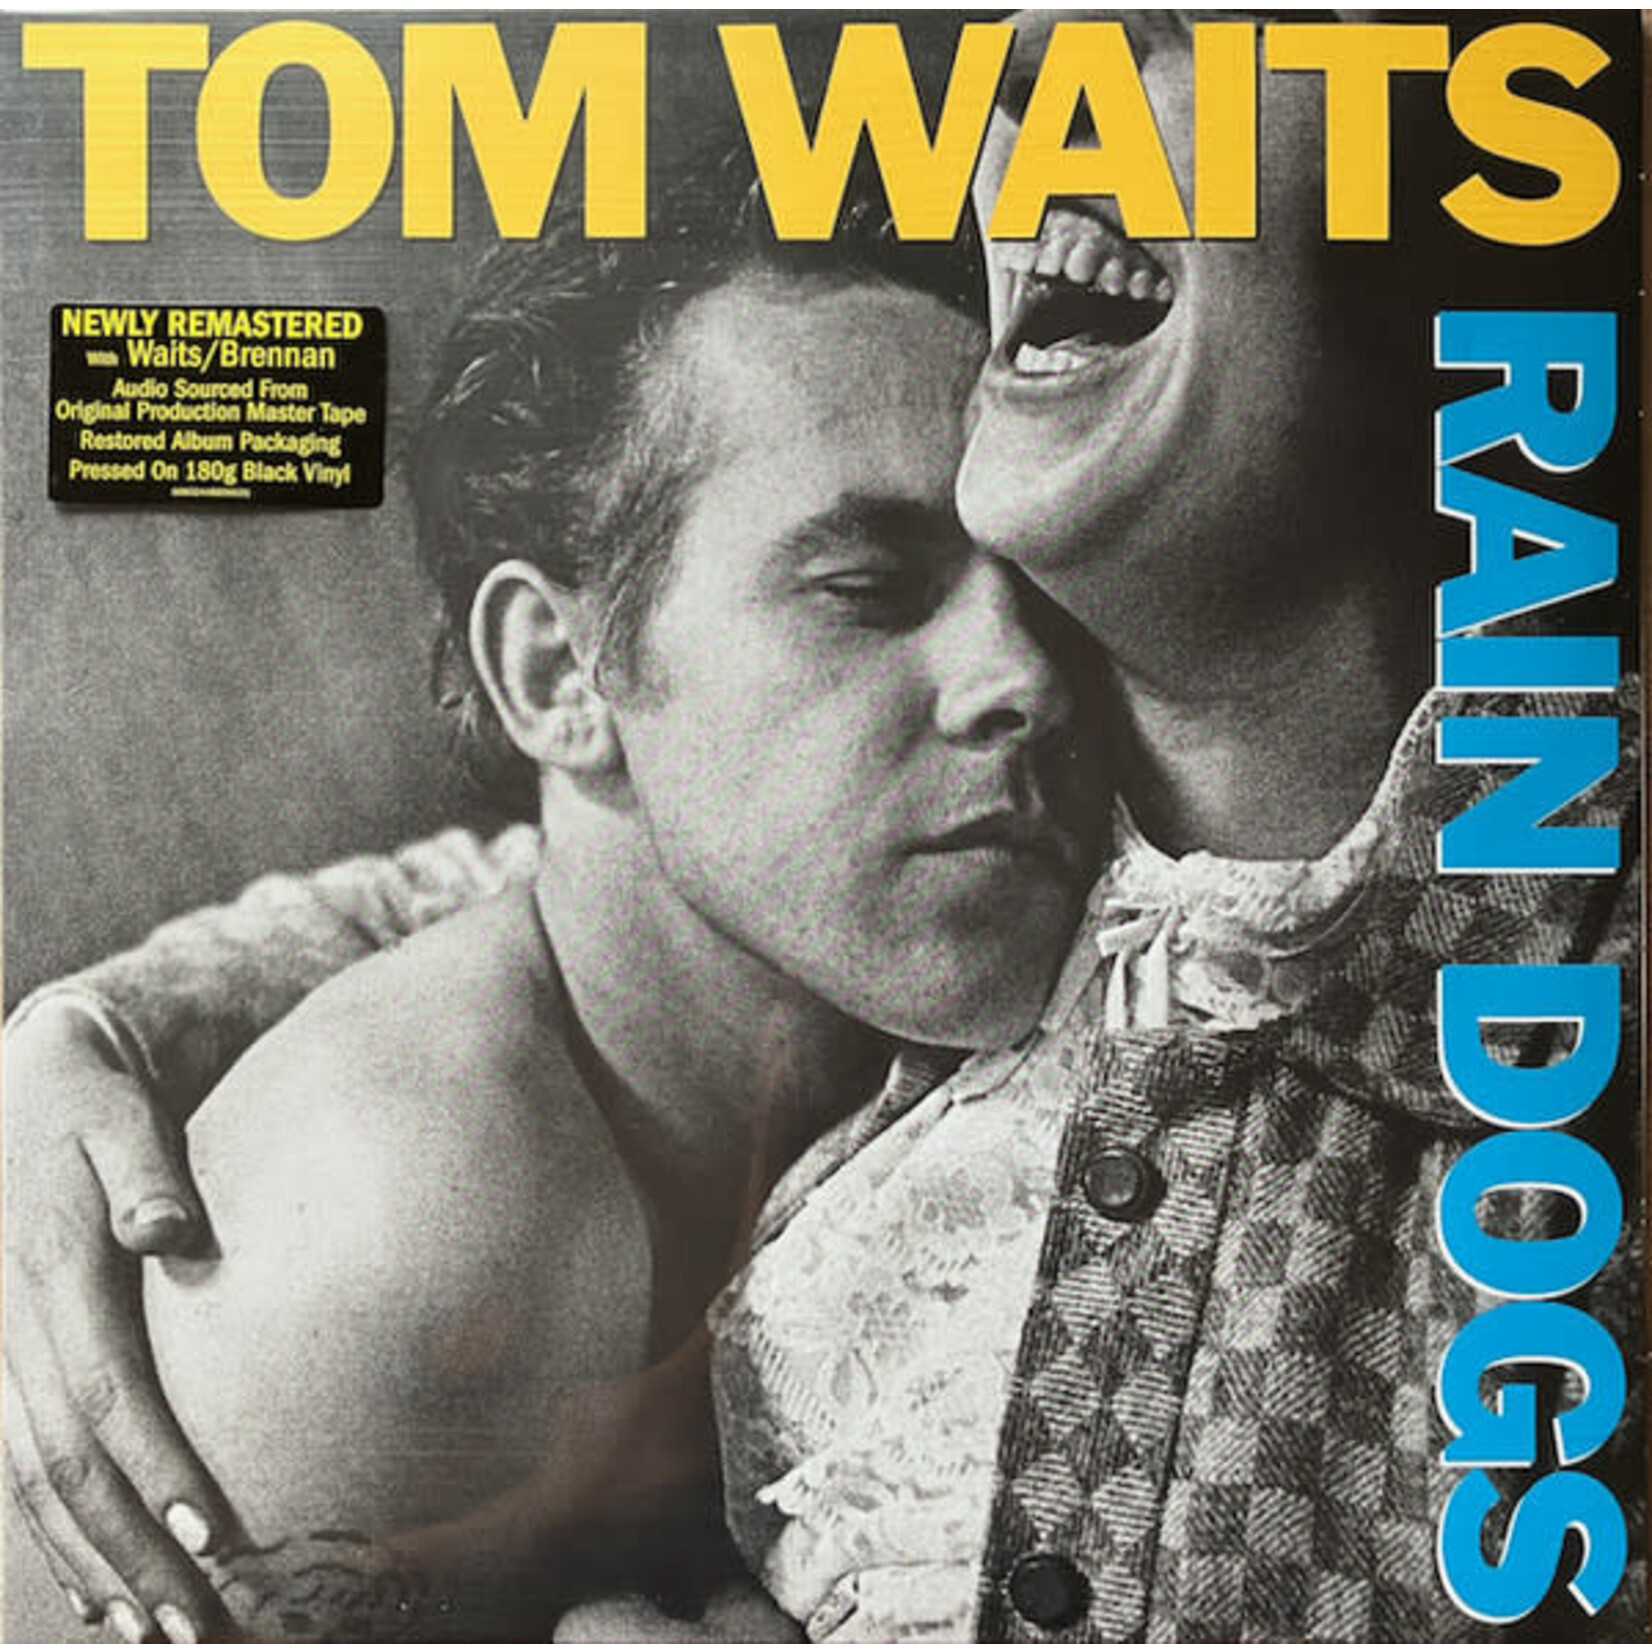 [New] Tom Waits - Rain Dogs (180g, remastered)